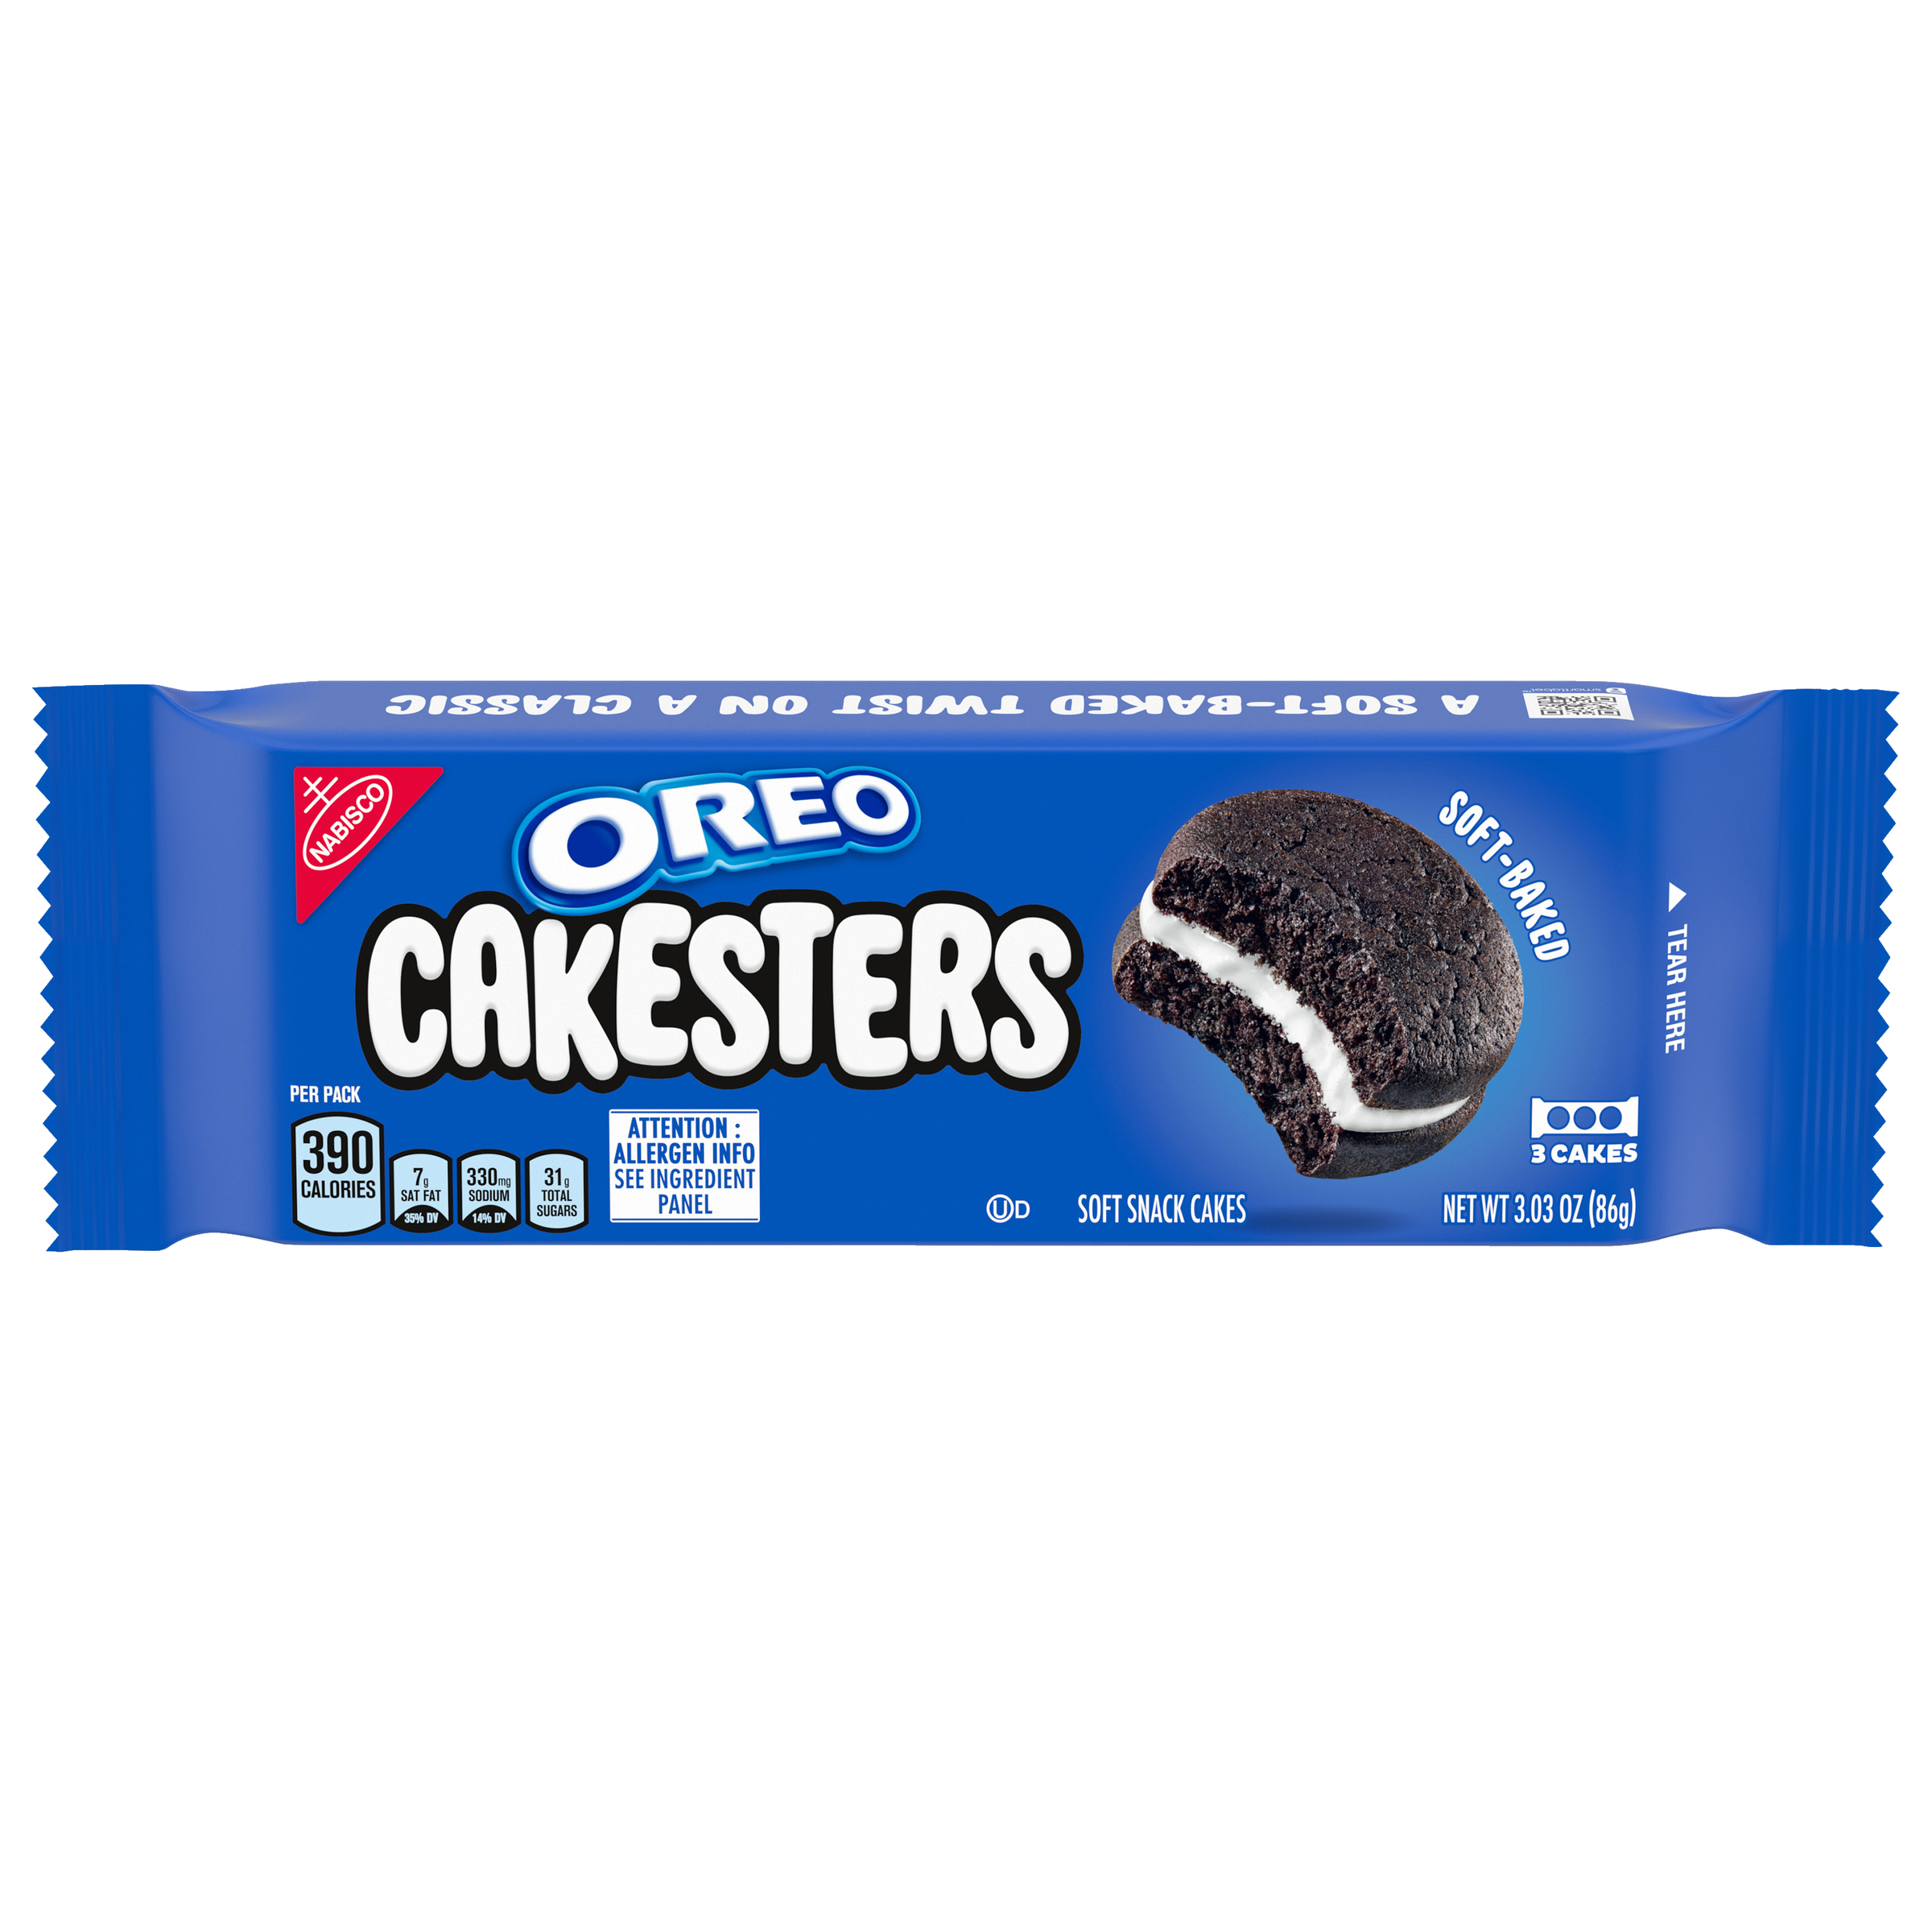 OREO Cakesters Soft Snack Cakes, 3.03 oz-0